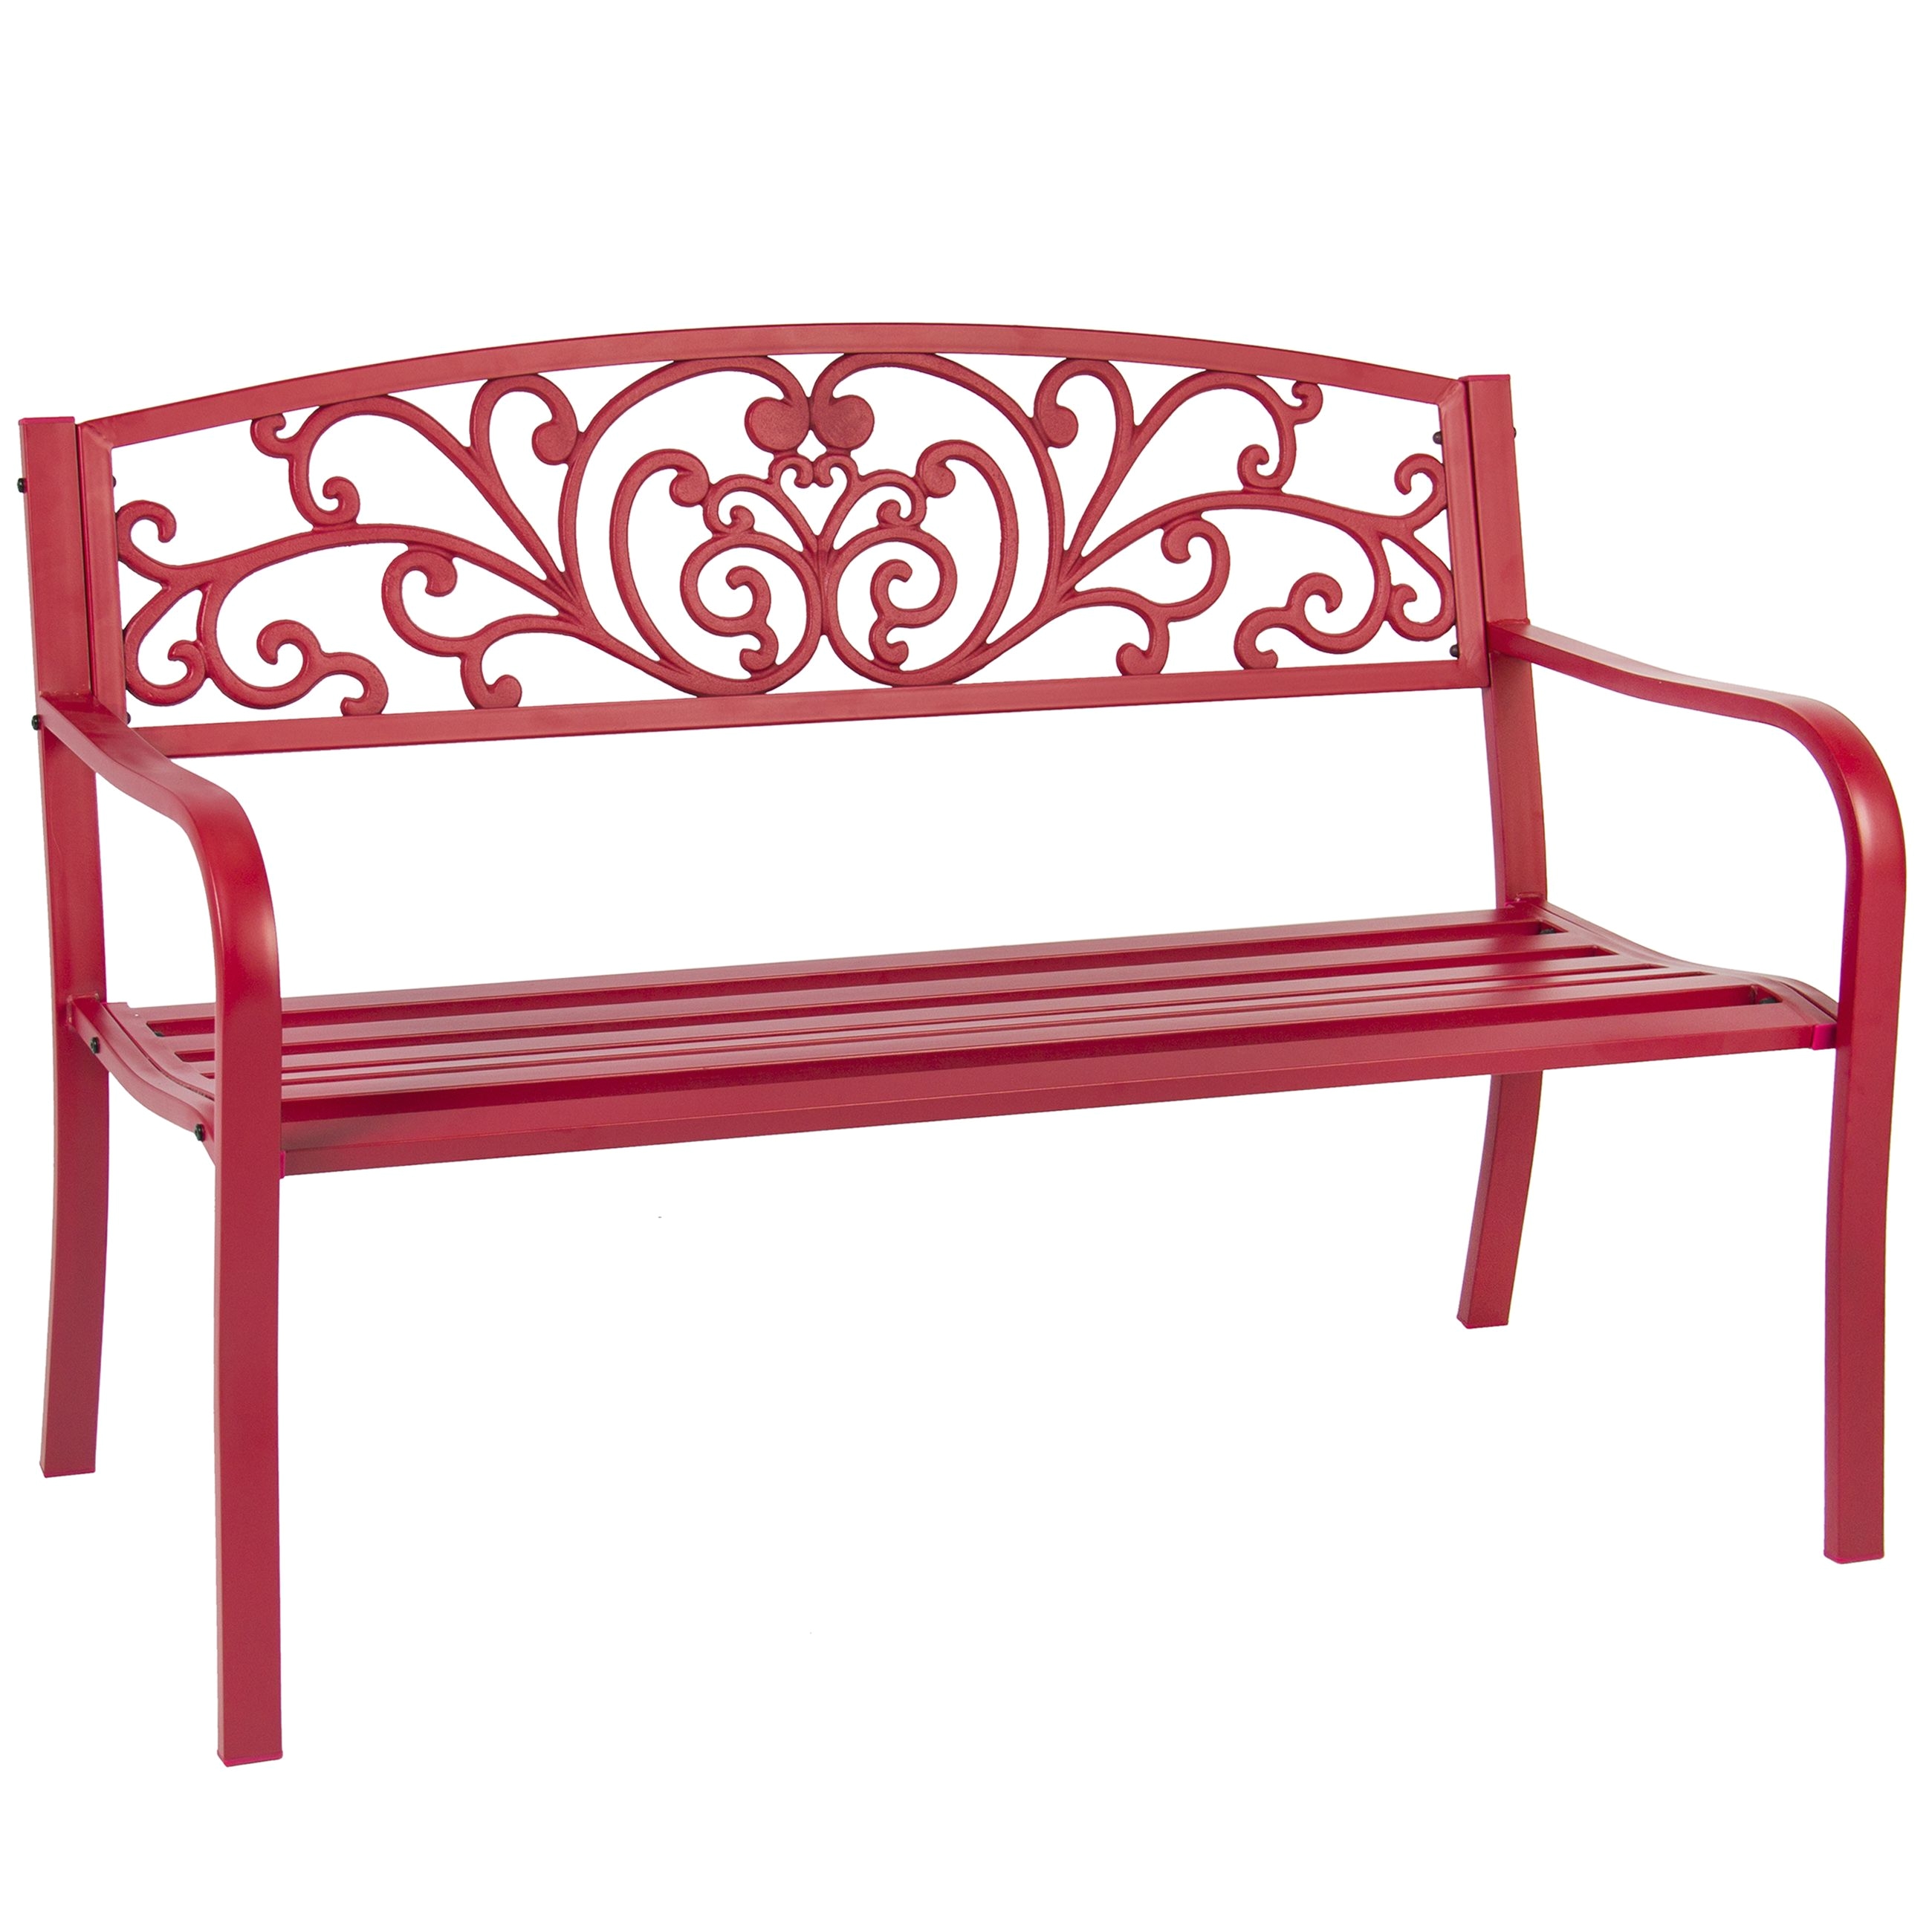 buy bcp 50 patio garden bench park yard outdoor furniture steel frame porch chair at walmart com